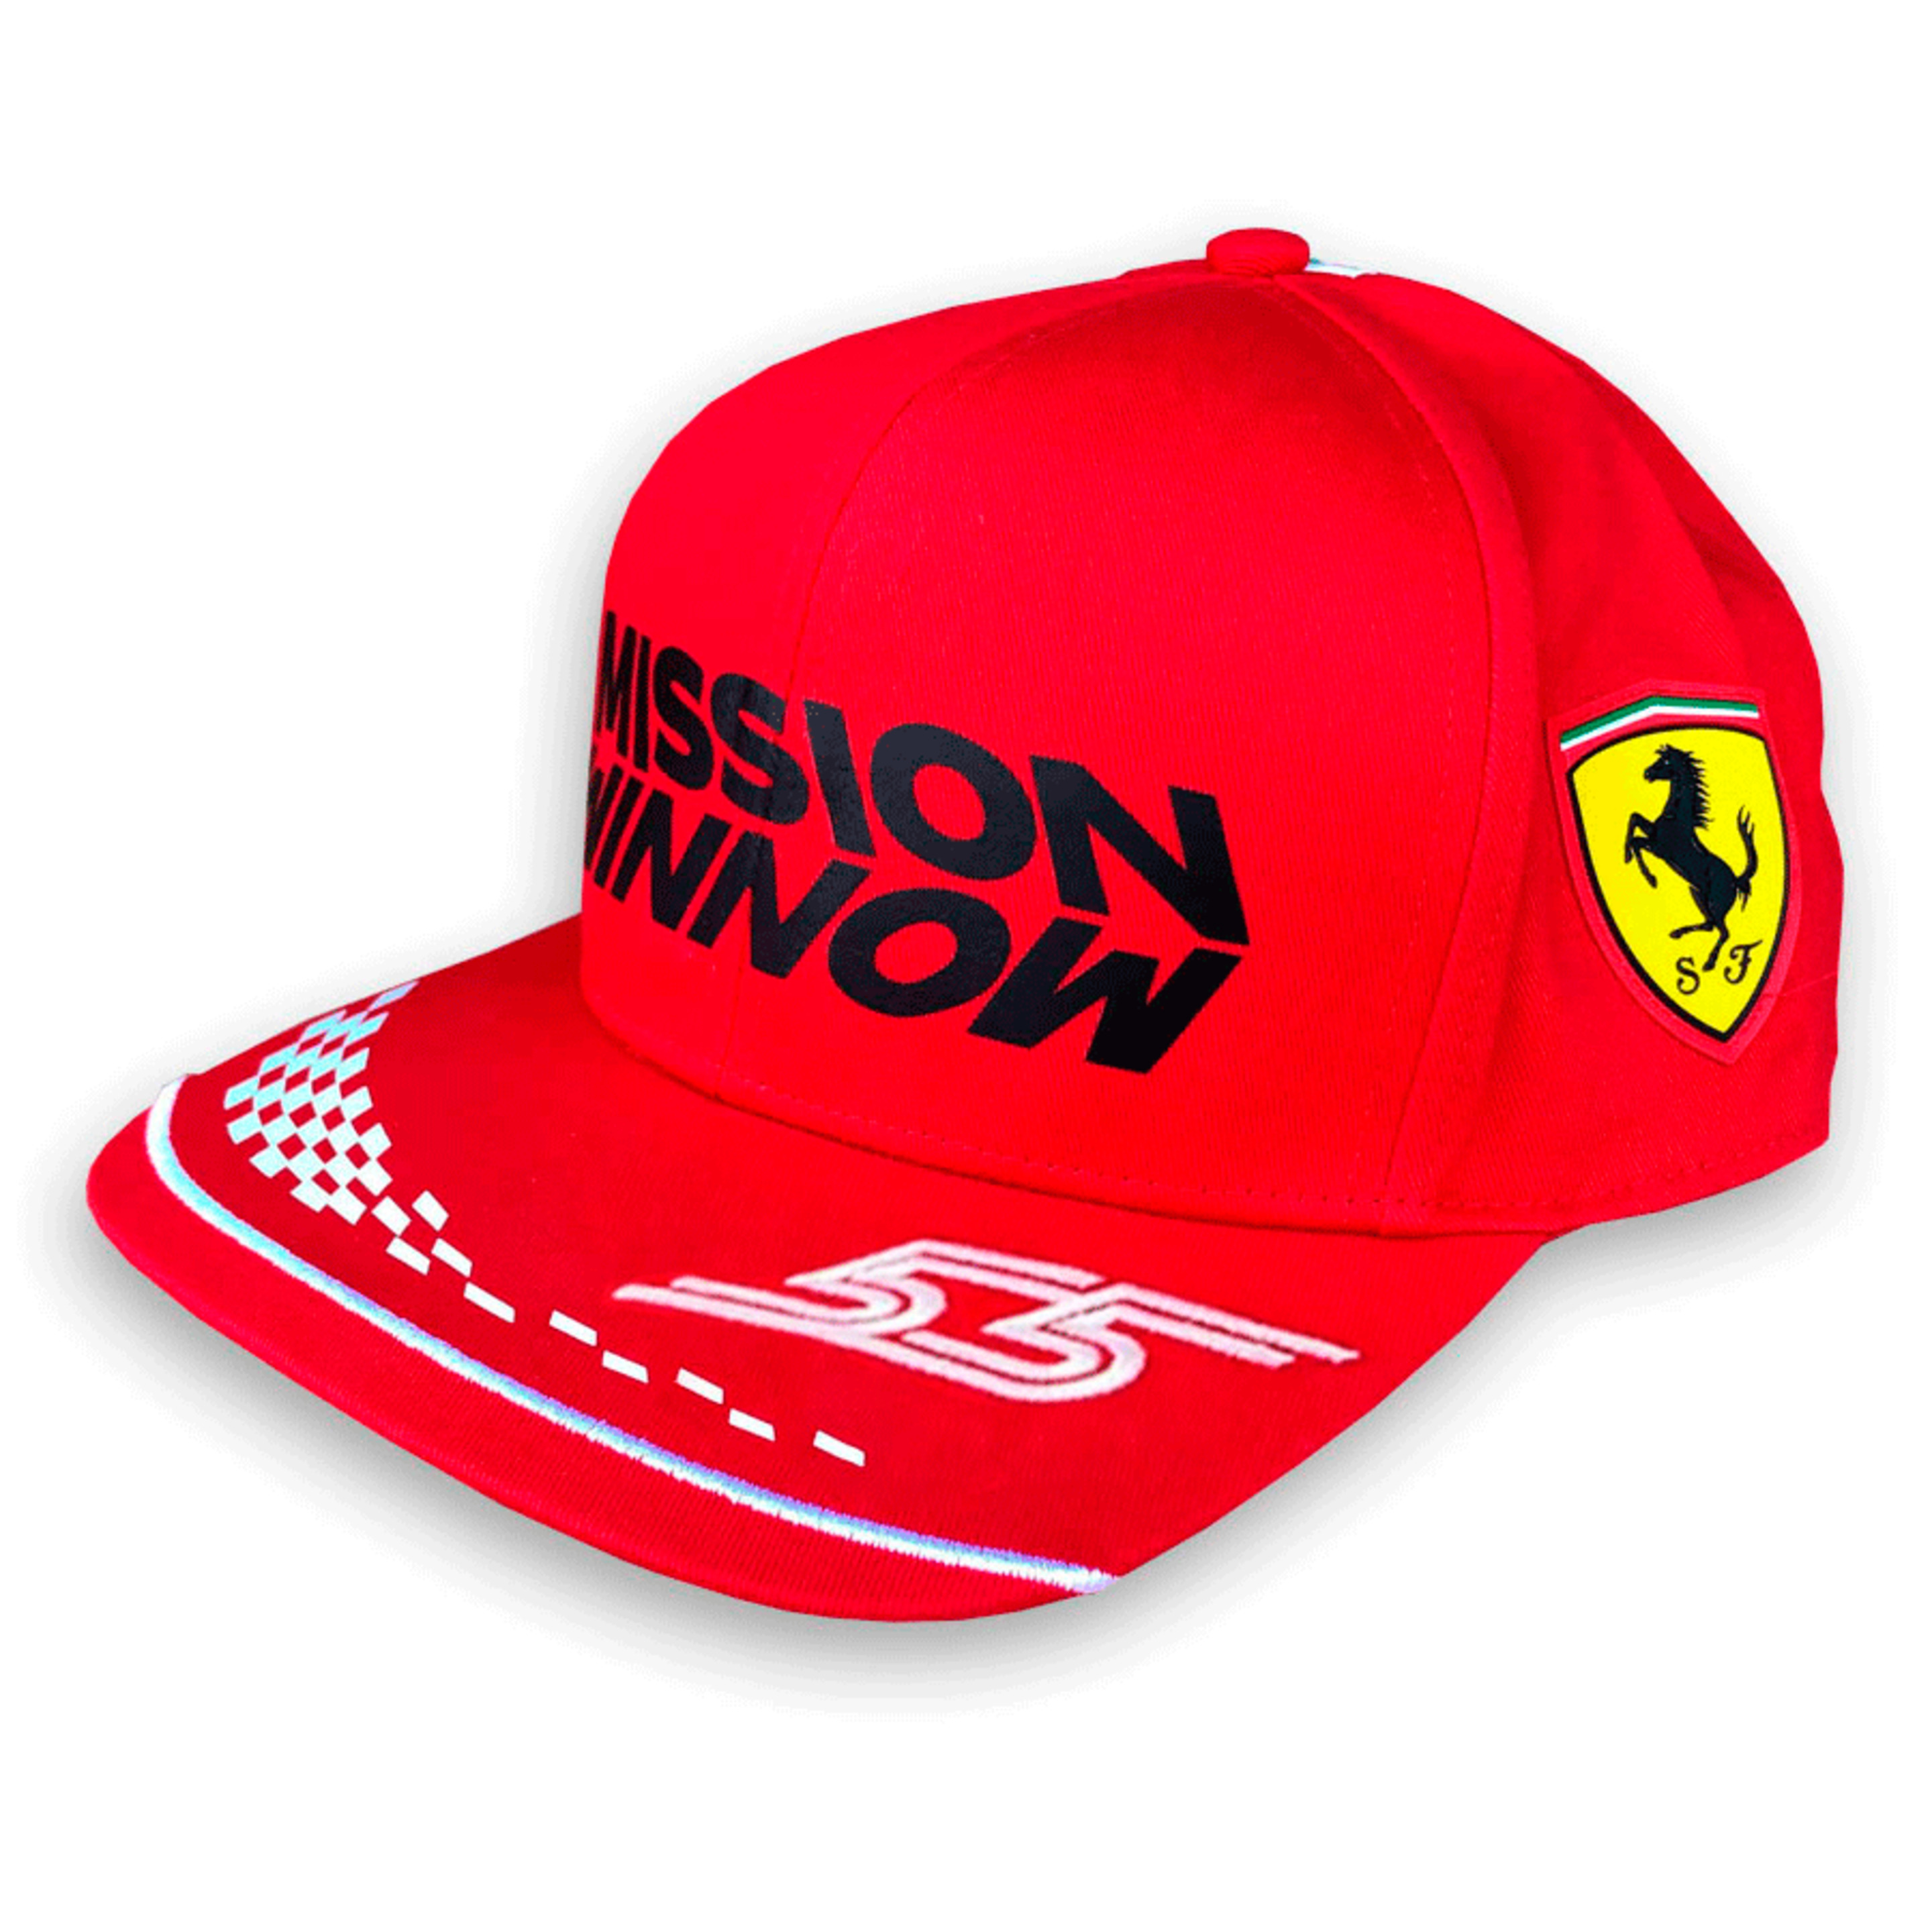 Gorra Scuderia Ferrari F1 Carlos Sainz Mission Winnow